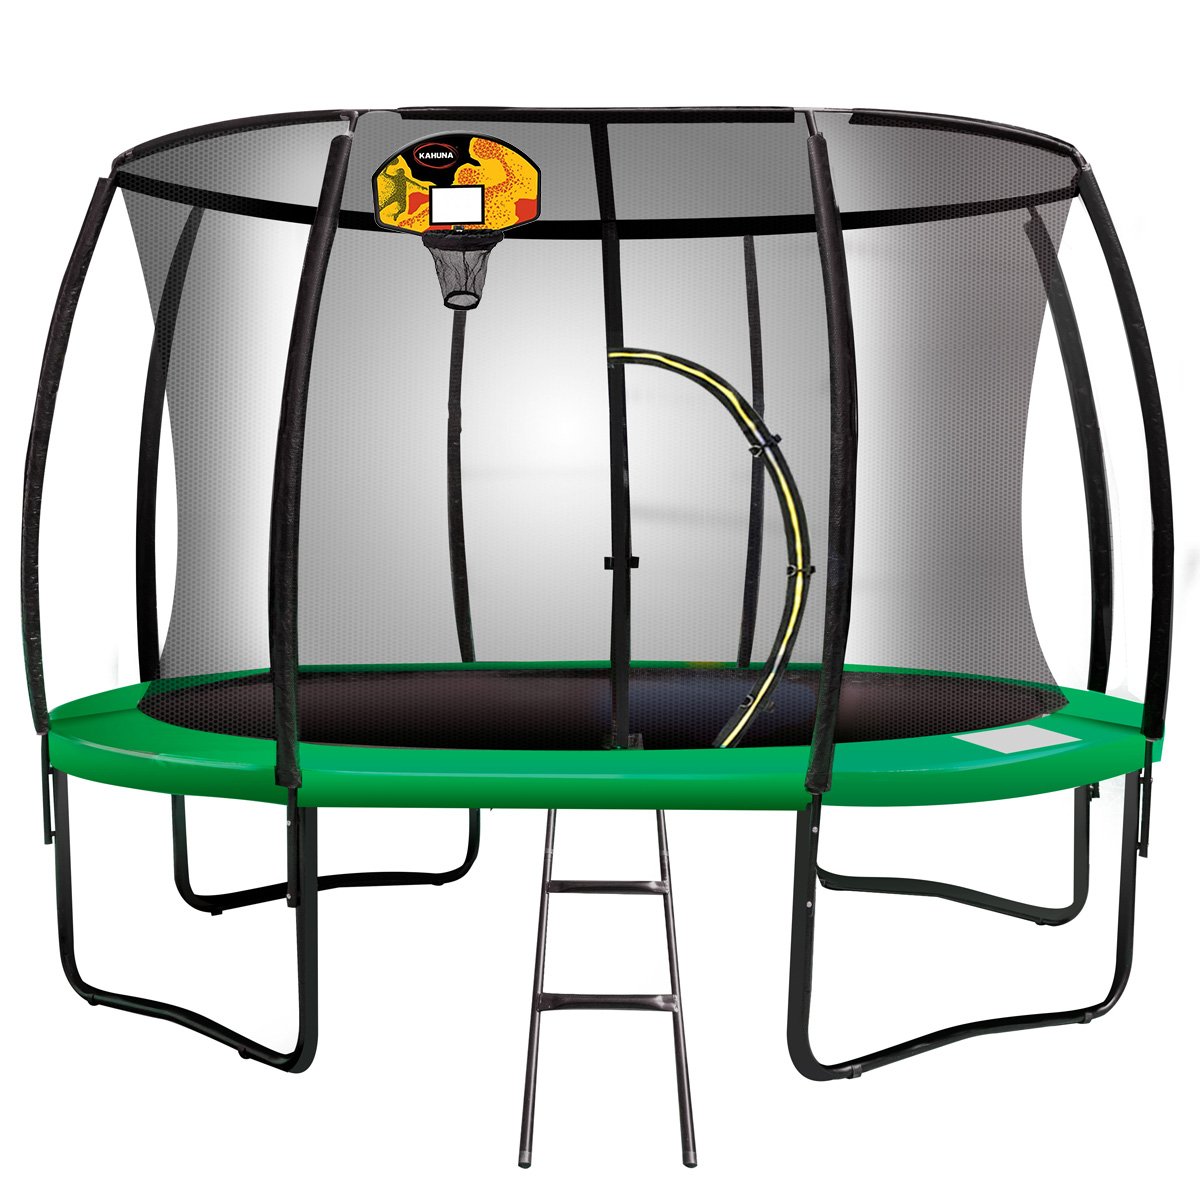 Kahuna 14ft Outdoor Trampoline Kids Children With Safety Enclosure Pad Mat Ladder Basketball Hoop Set - Green